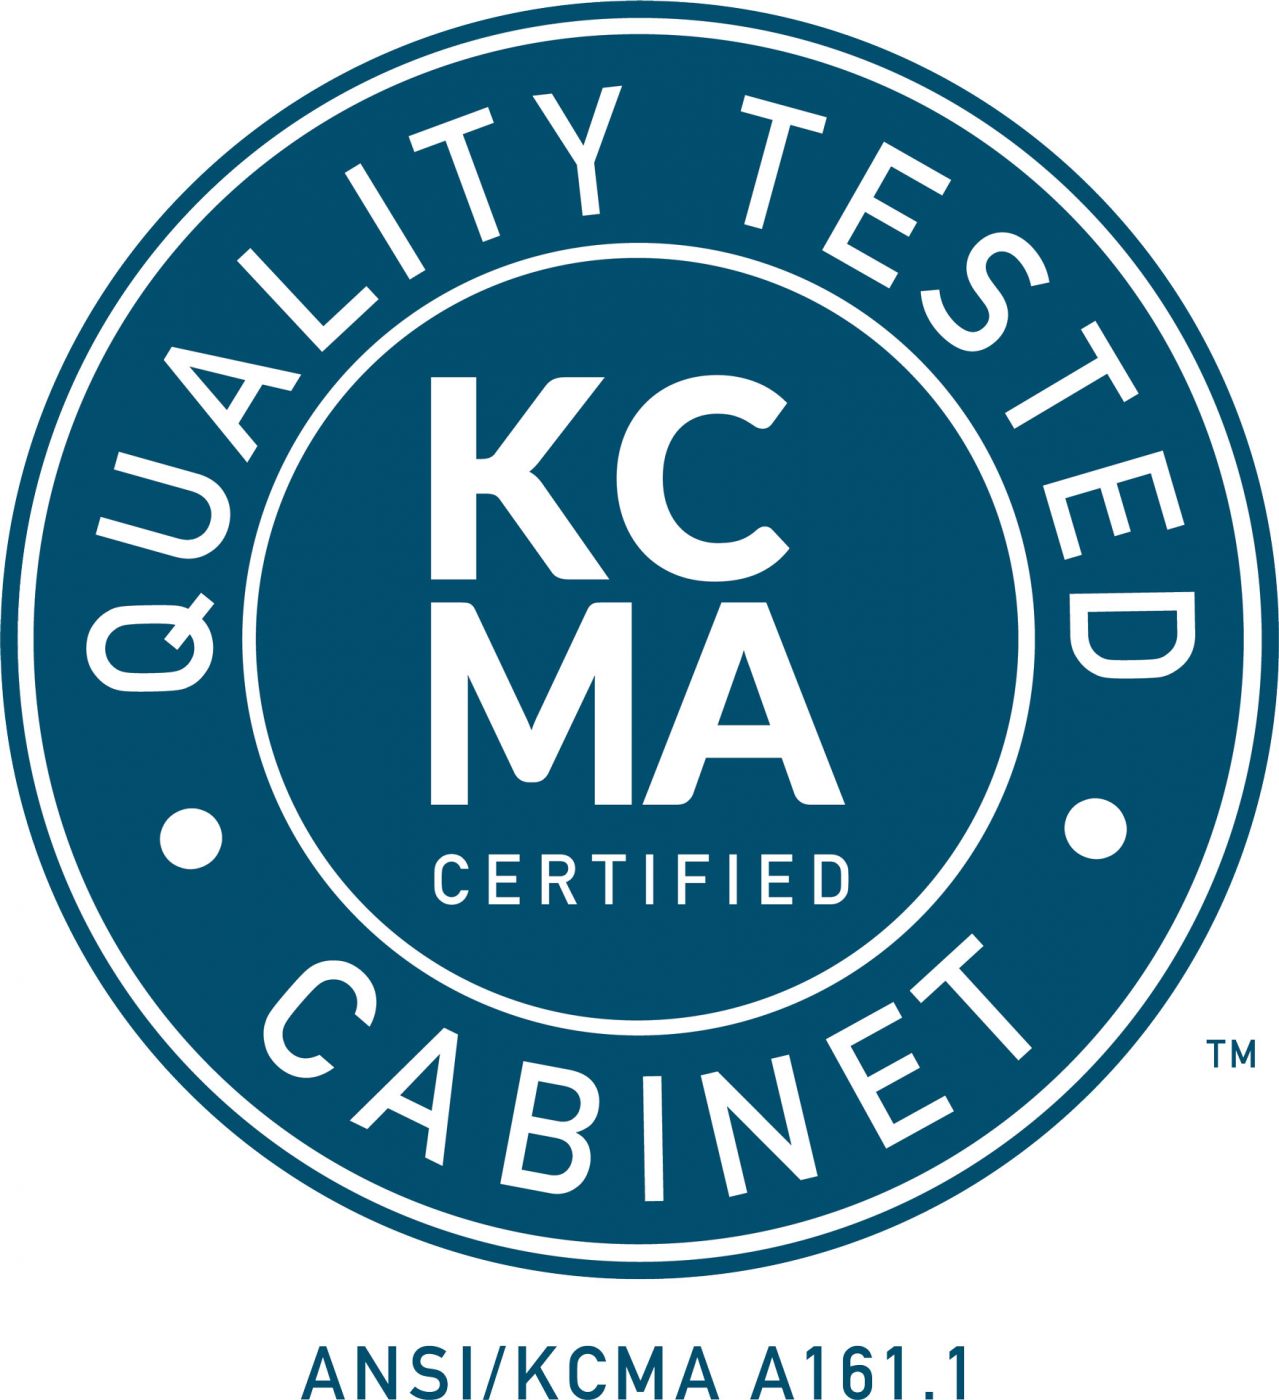 kcma certification badge